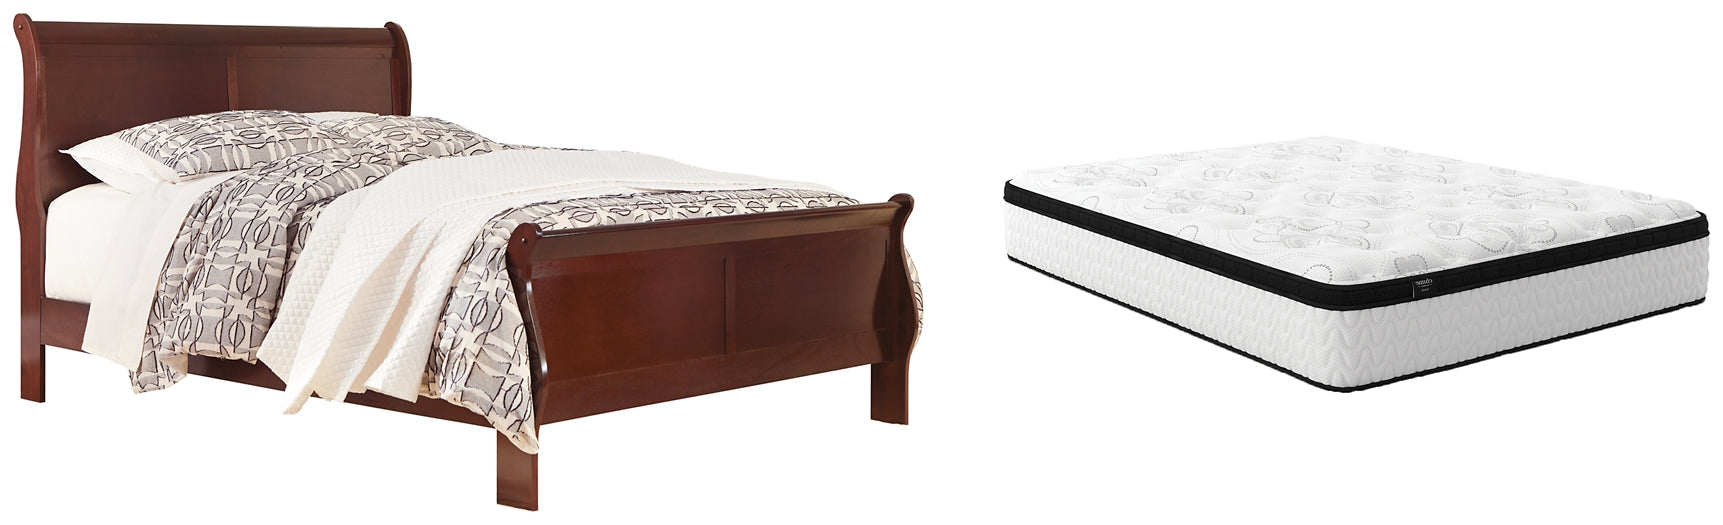 Alisdair Queen Sleigh Bed with Mattress JB's Furniture Furniture, Bedroom, Accessories